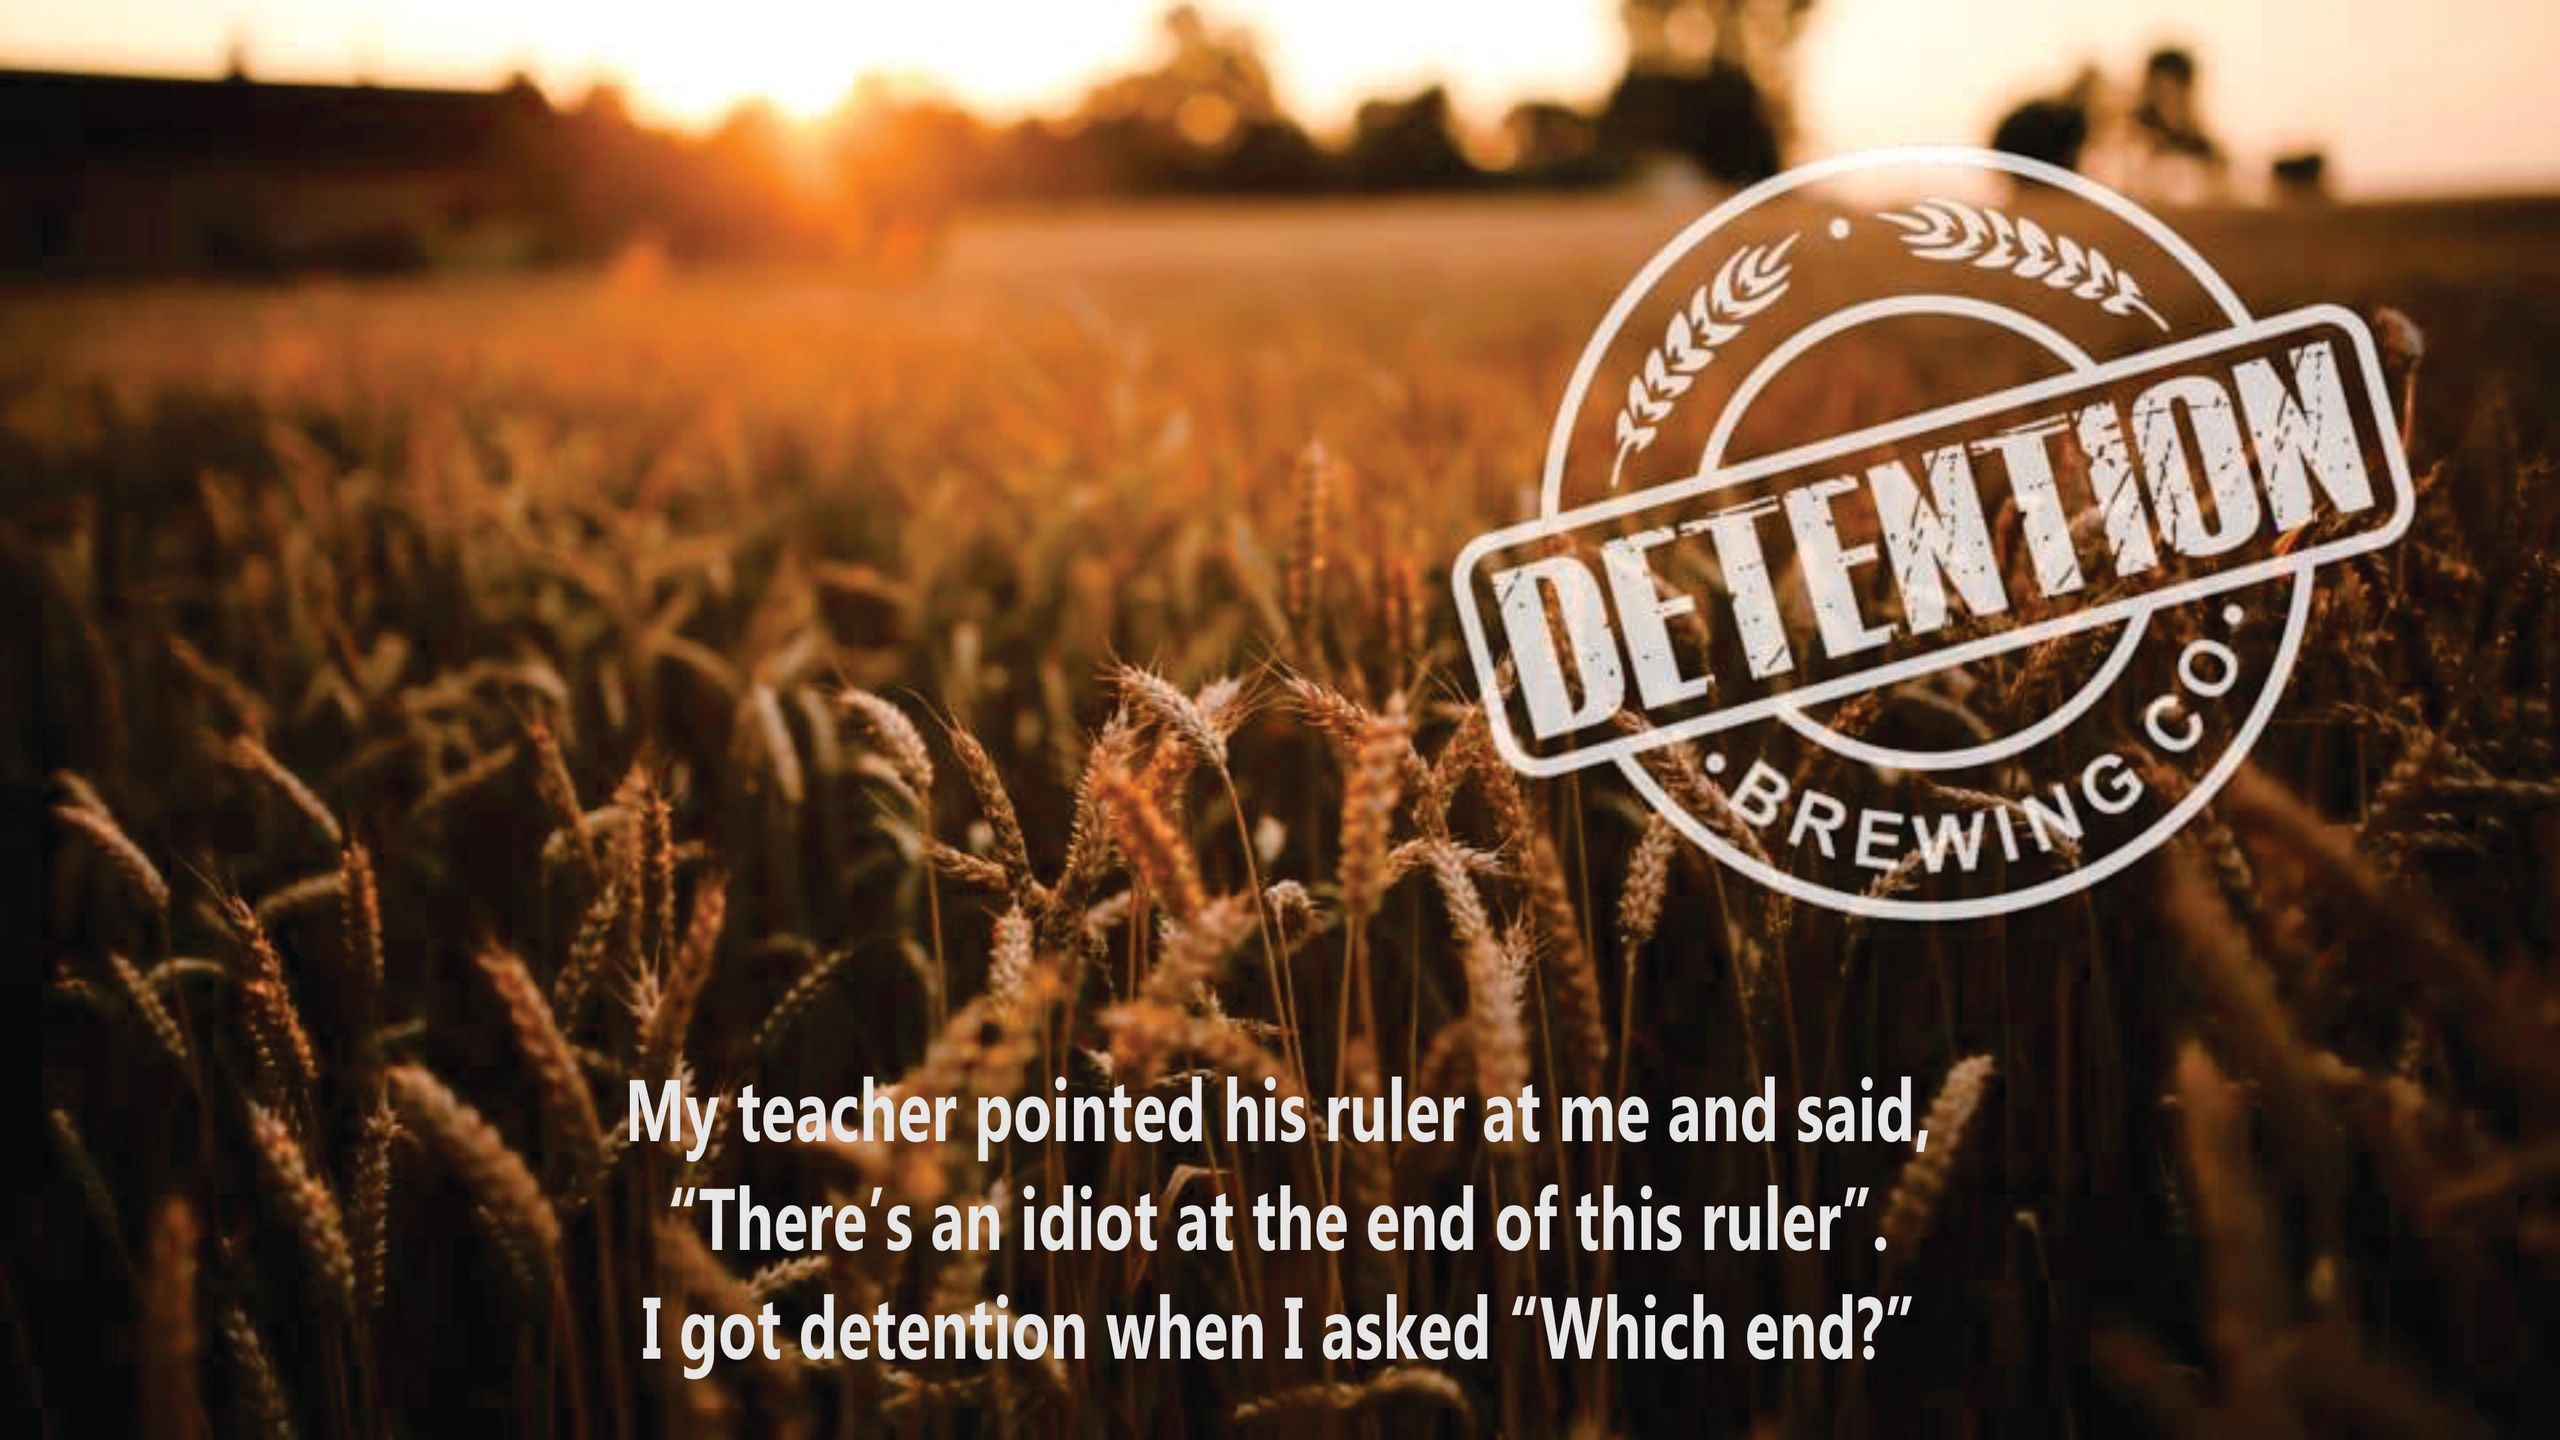 (c) Detentionbrewing.ca